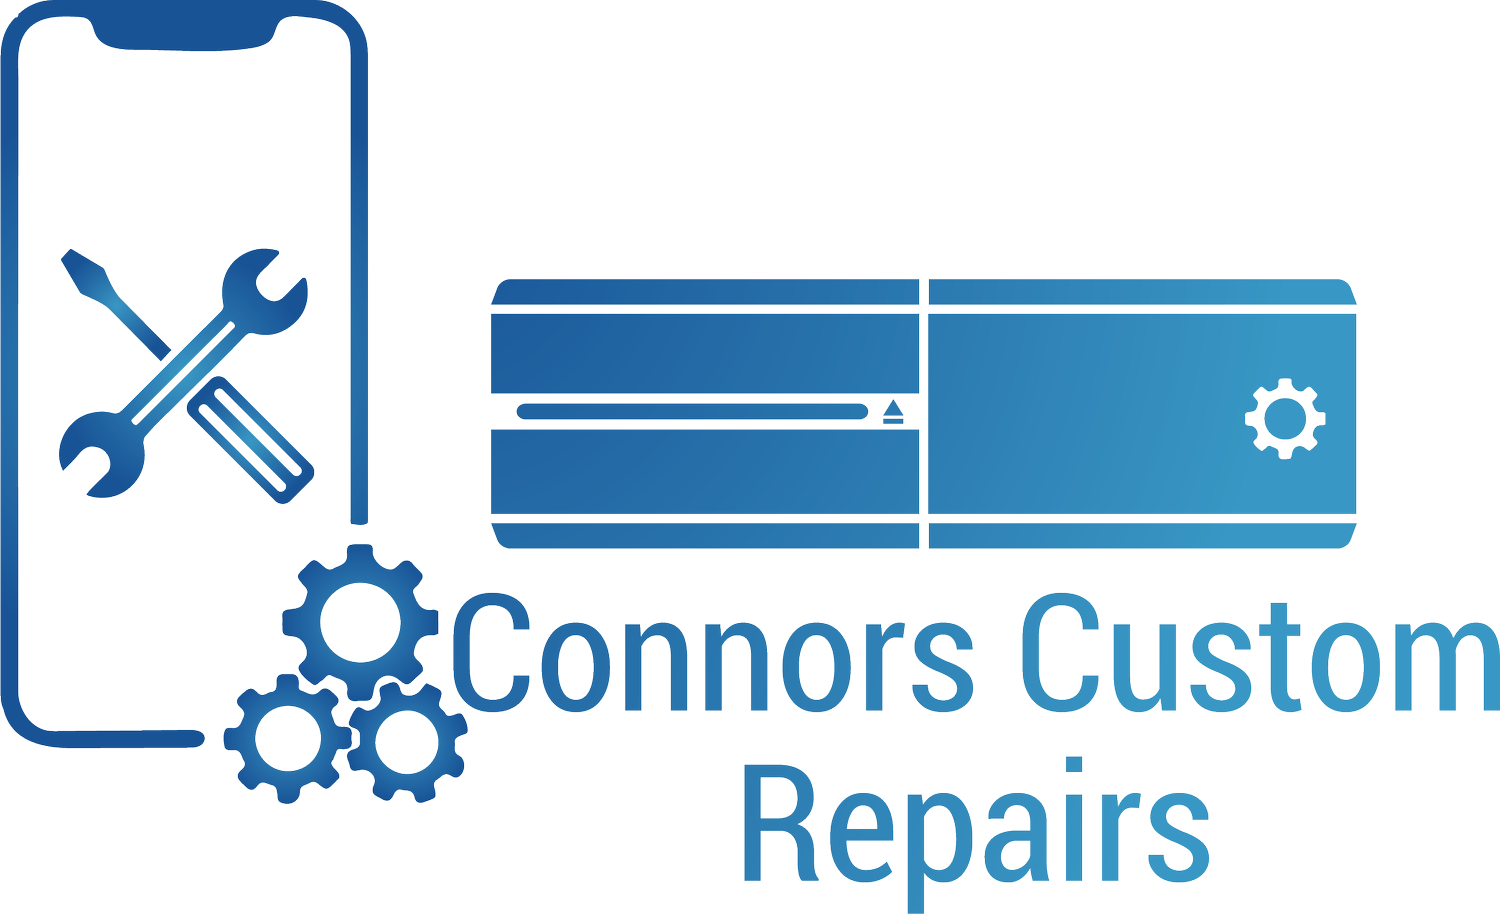 Connors Custom Repairs